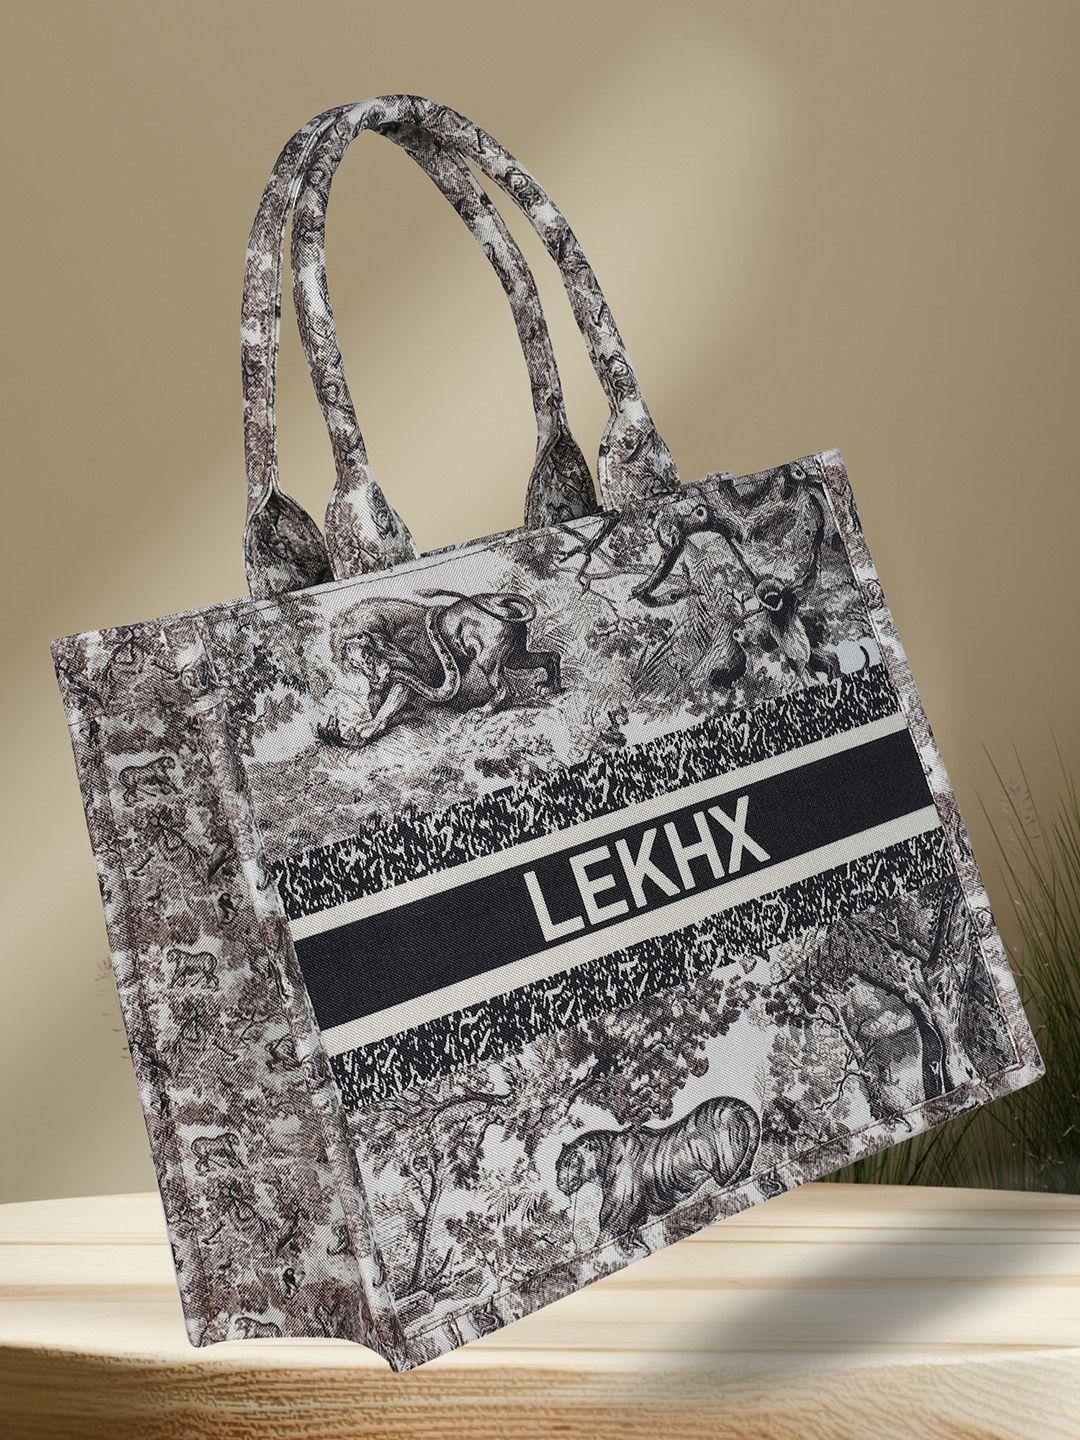 lekhx printed structured handheld bag